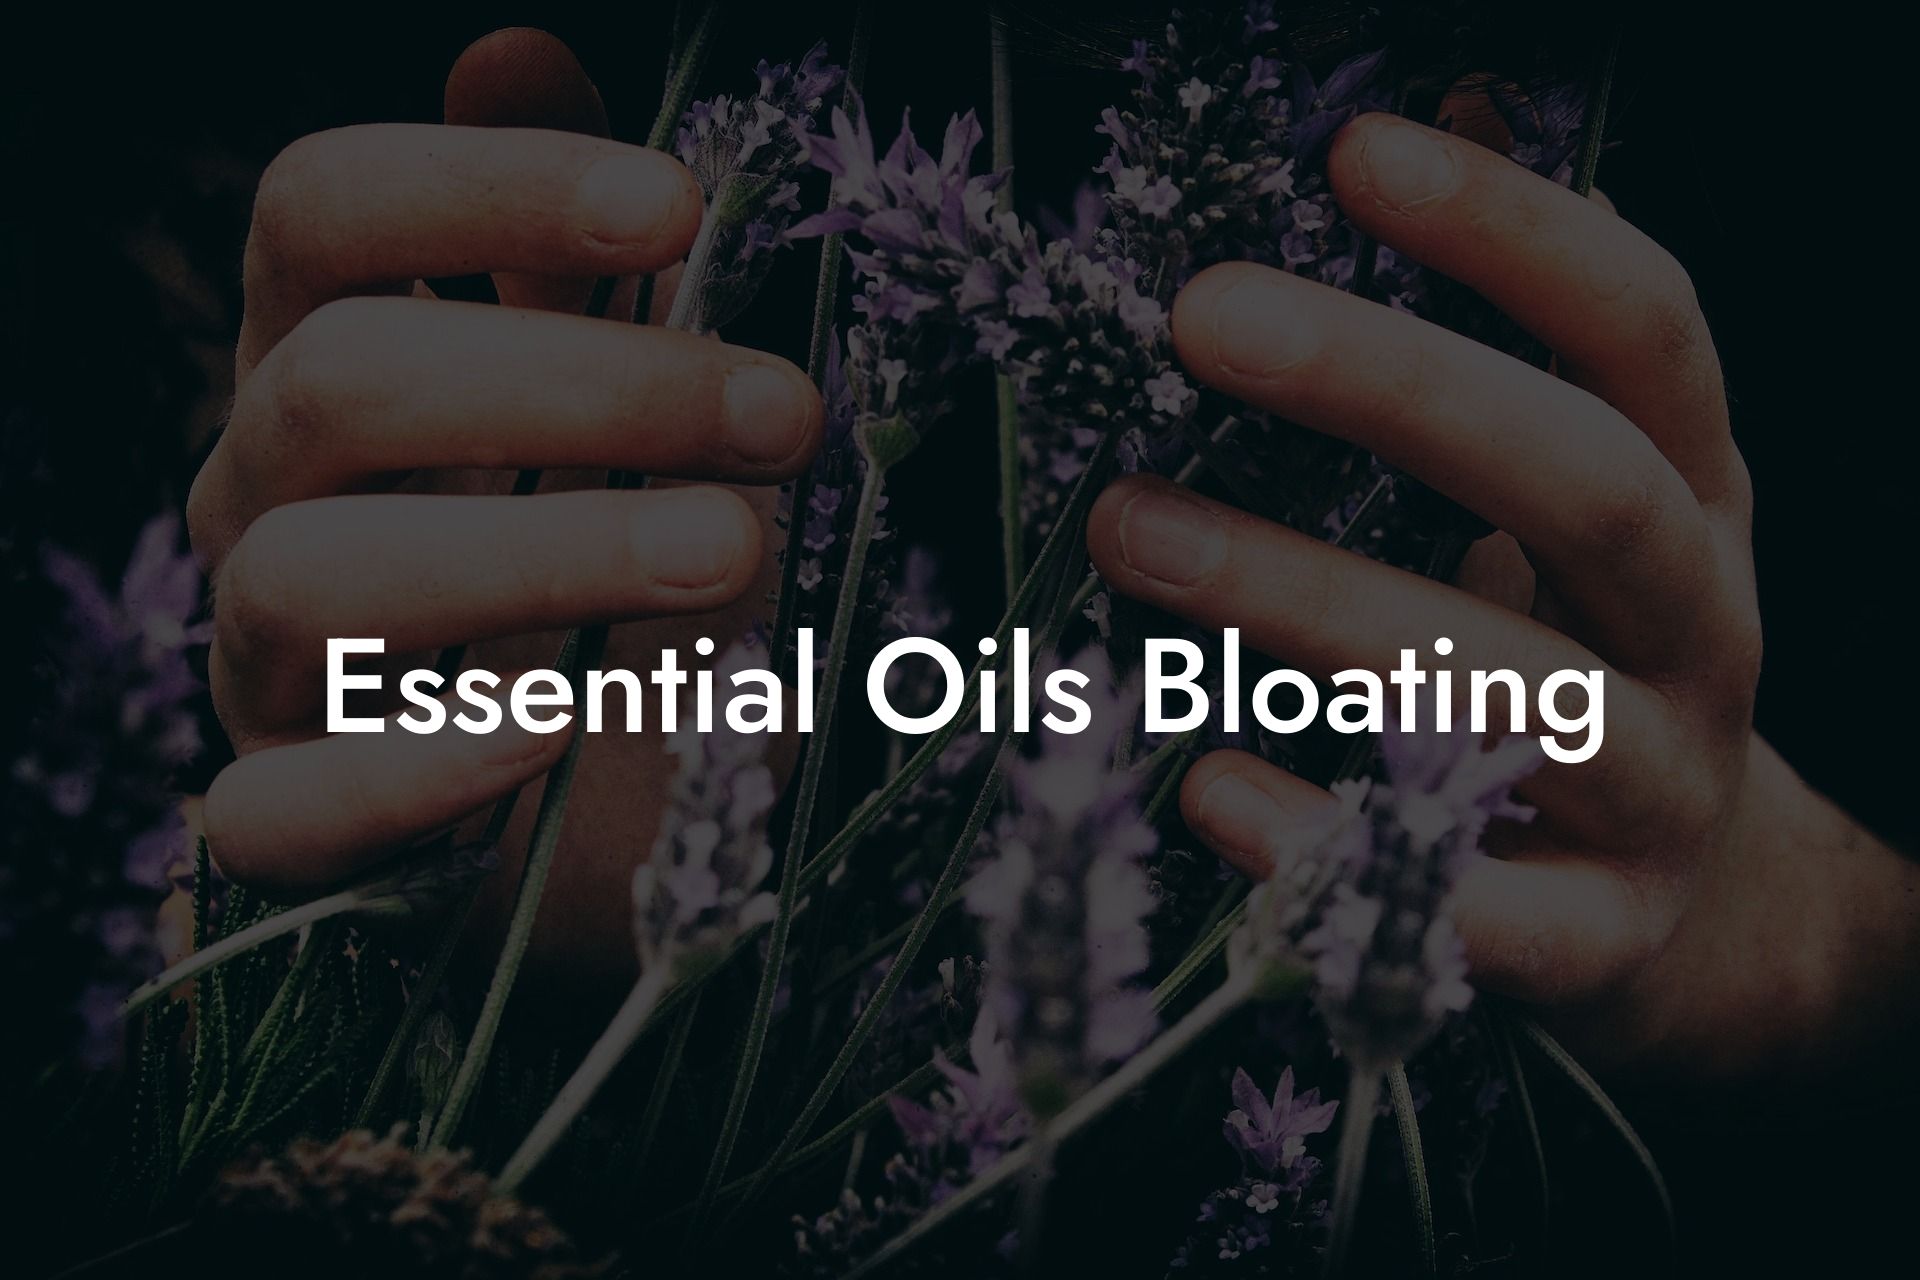 Essential Oils Bloating